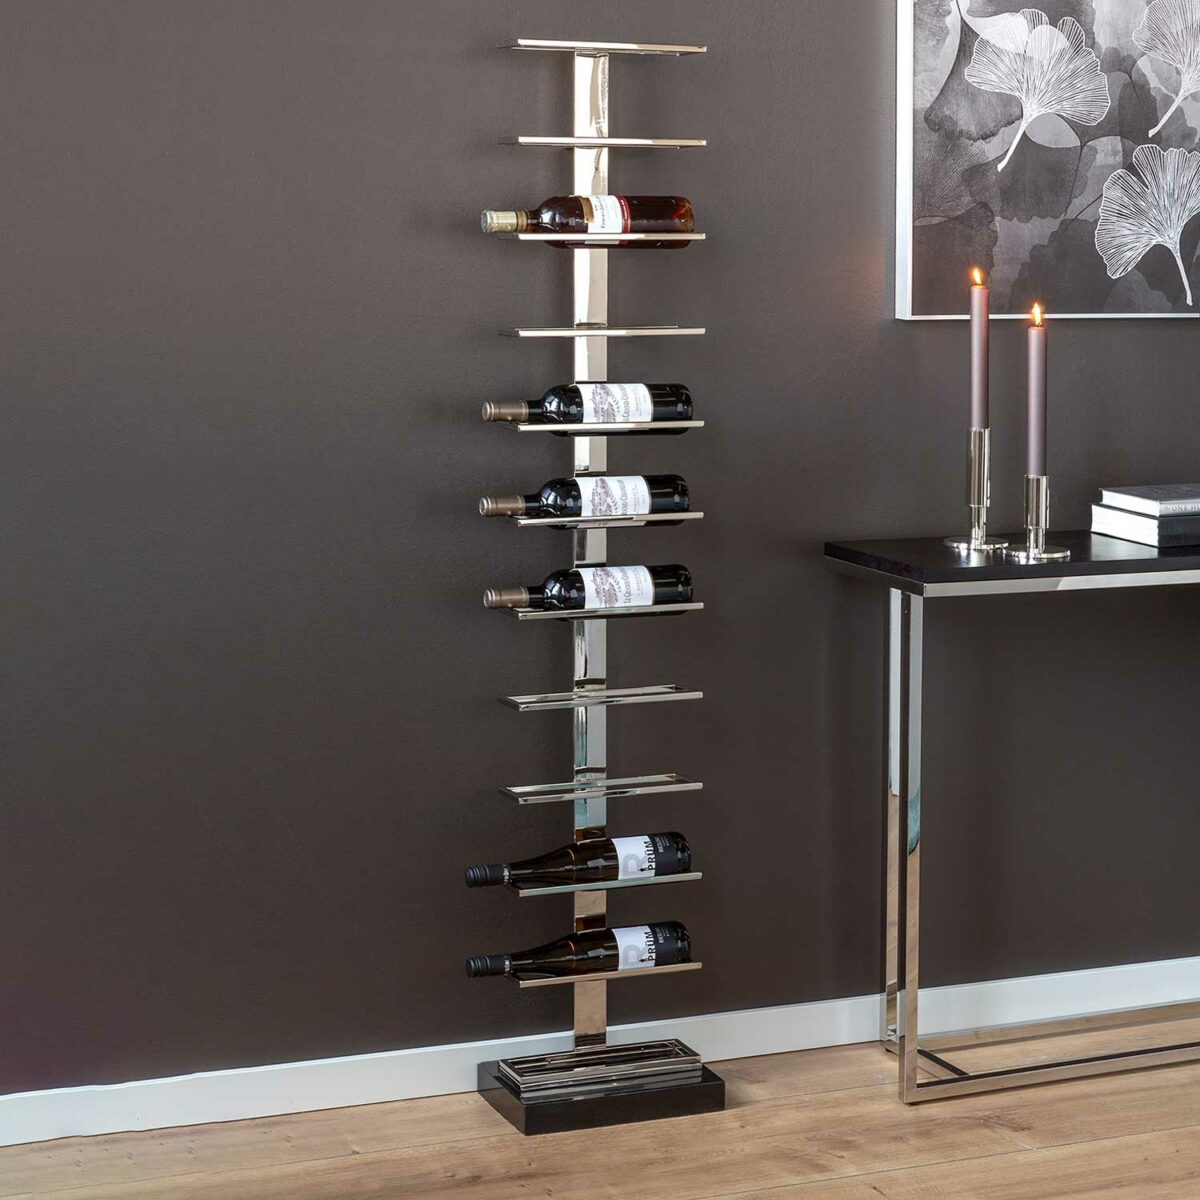 VINO VERITAS wine rack standing